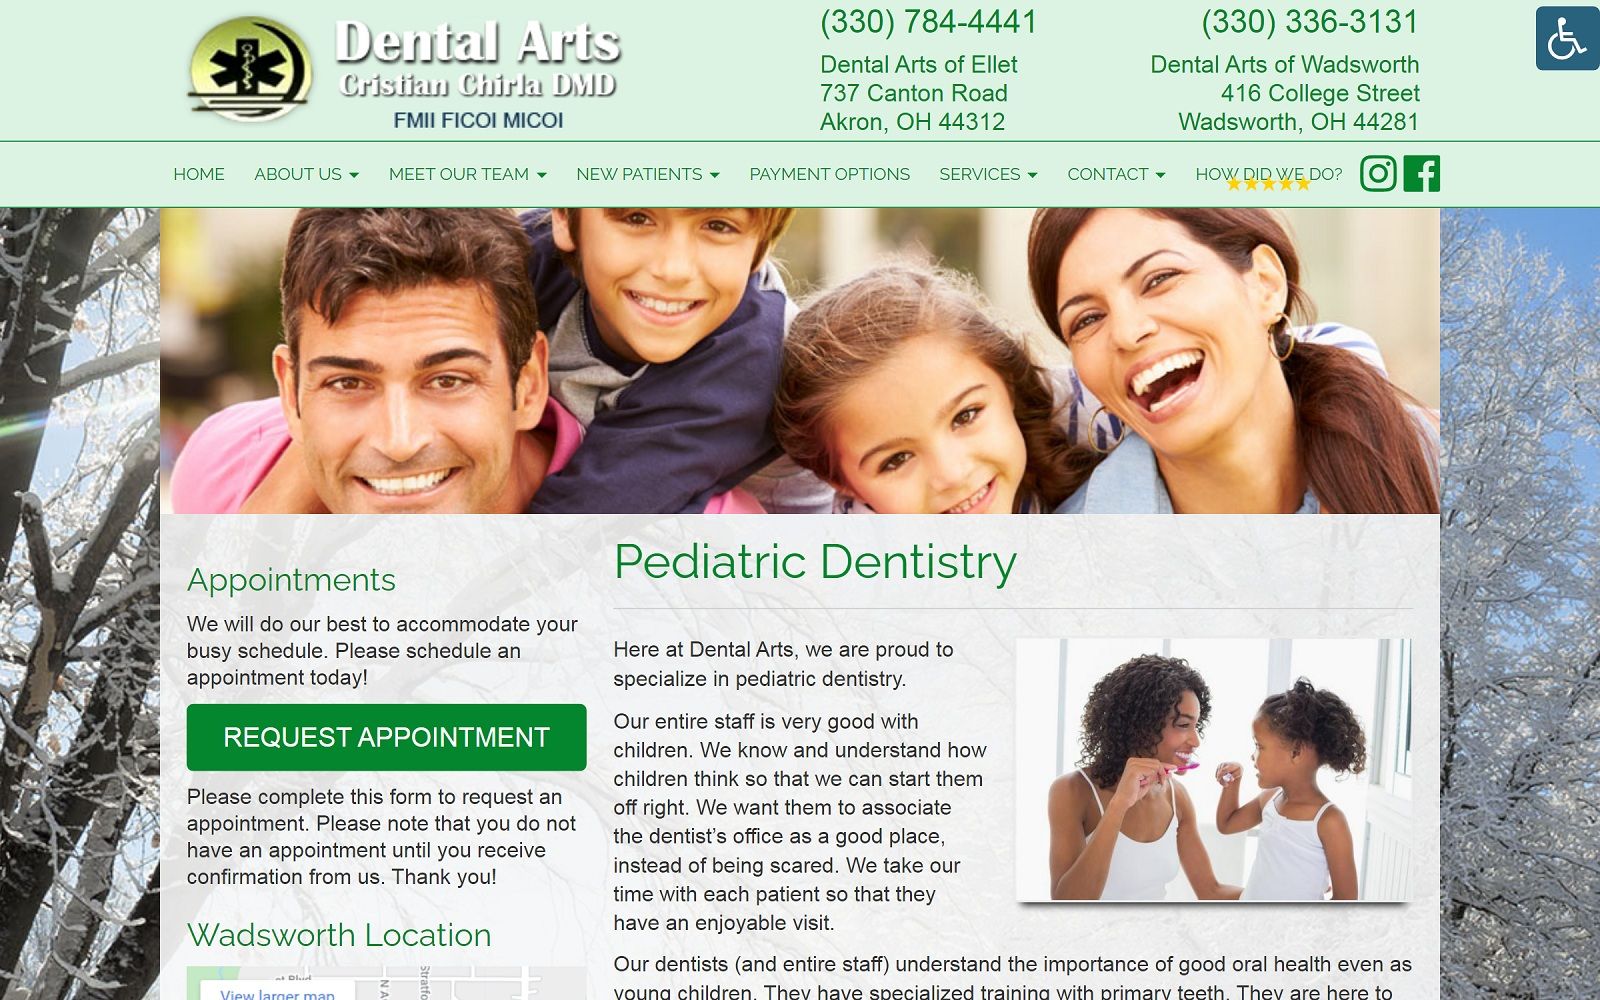 The screenshot of dental arts - cristian chirla dmd cristianchirladmd. Com website